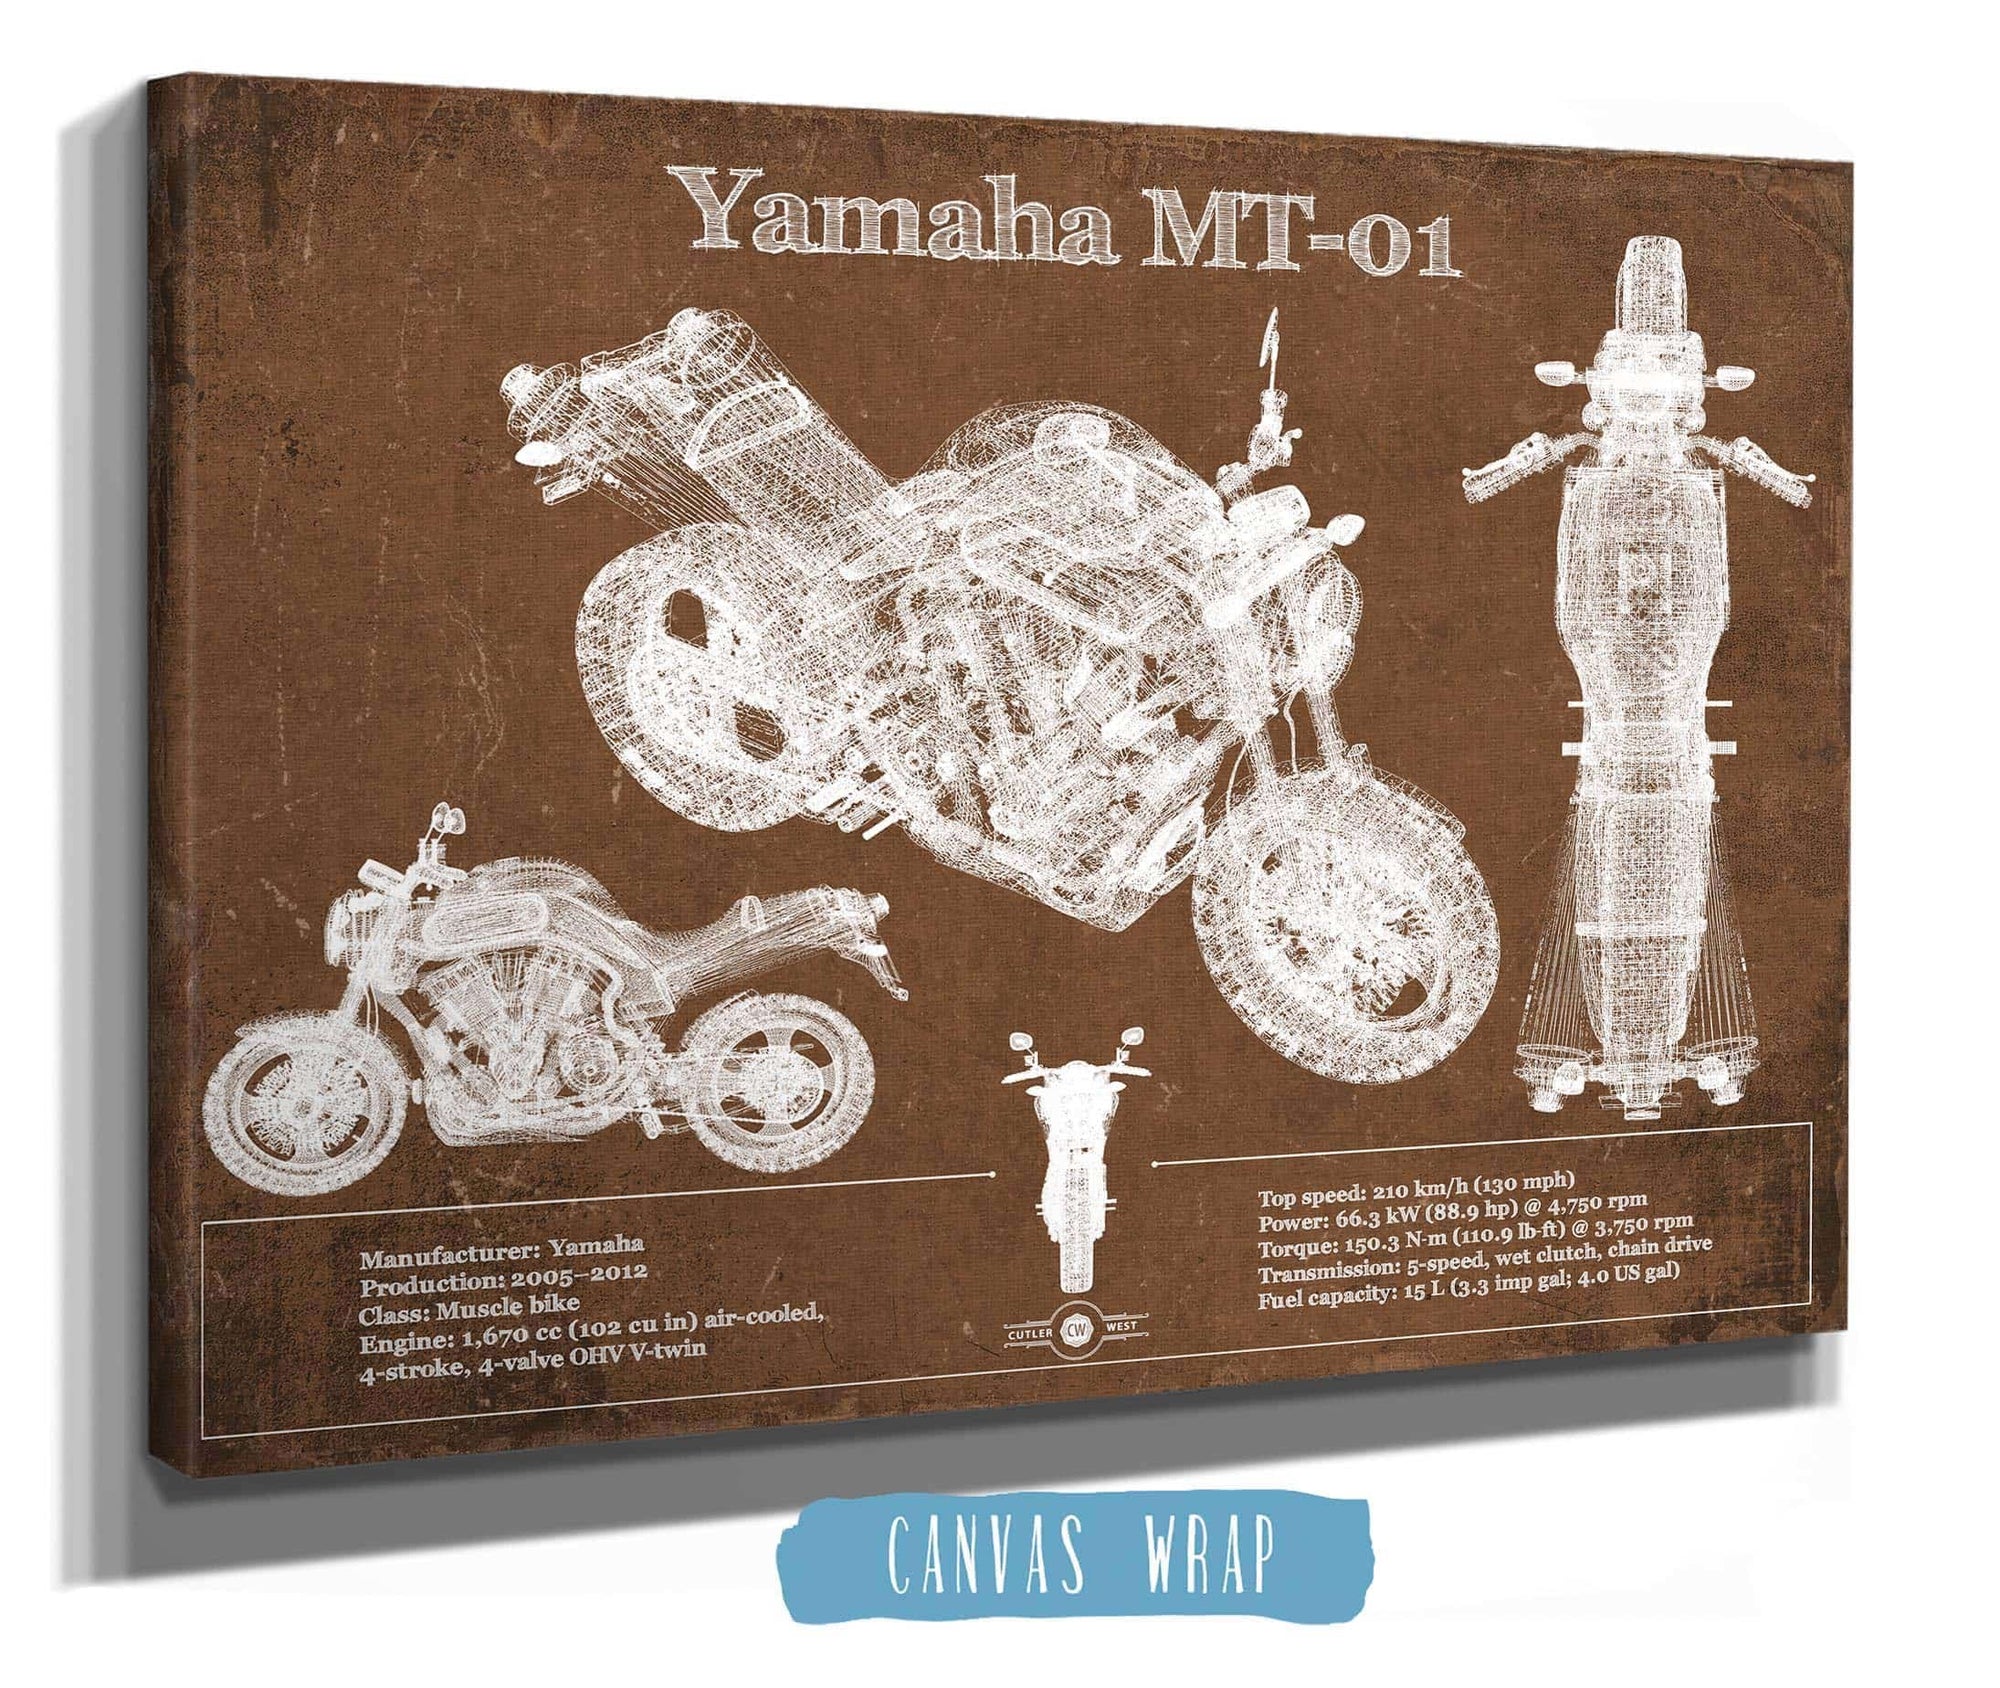 Cutler West Yamaha MT-01 Blueprint Motorcycle Patent Print